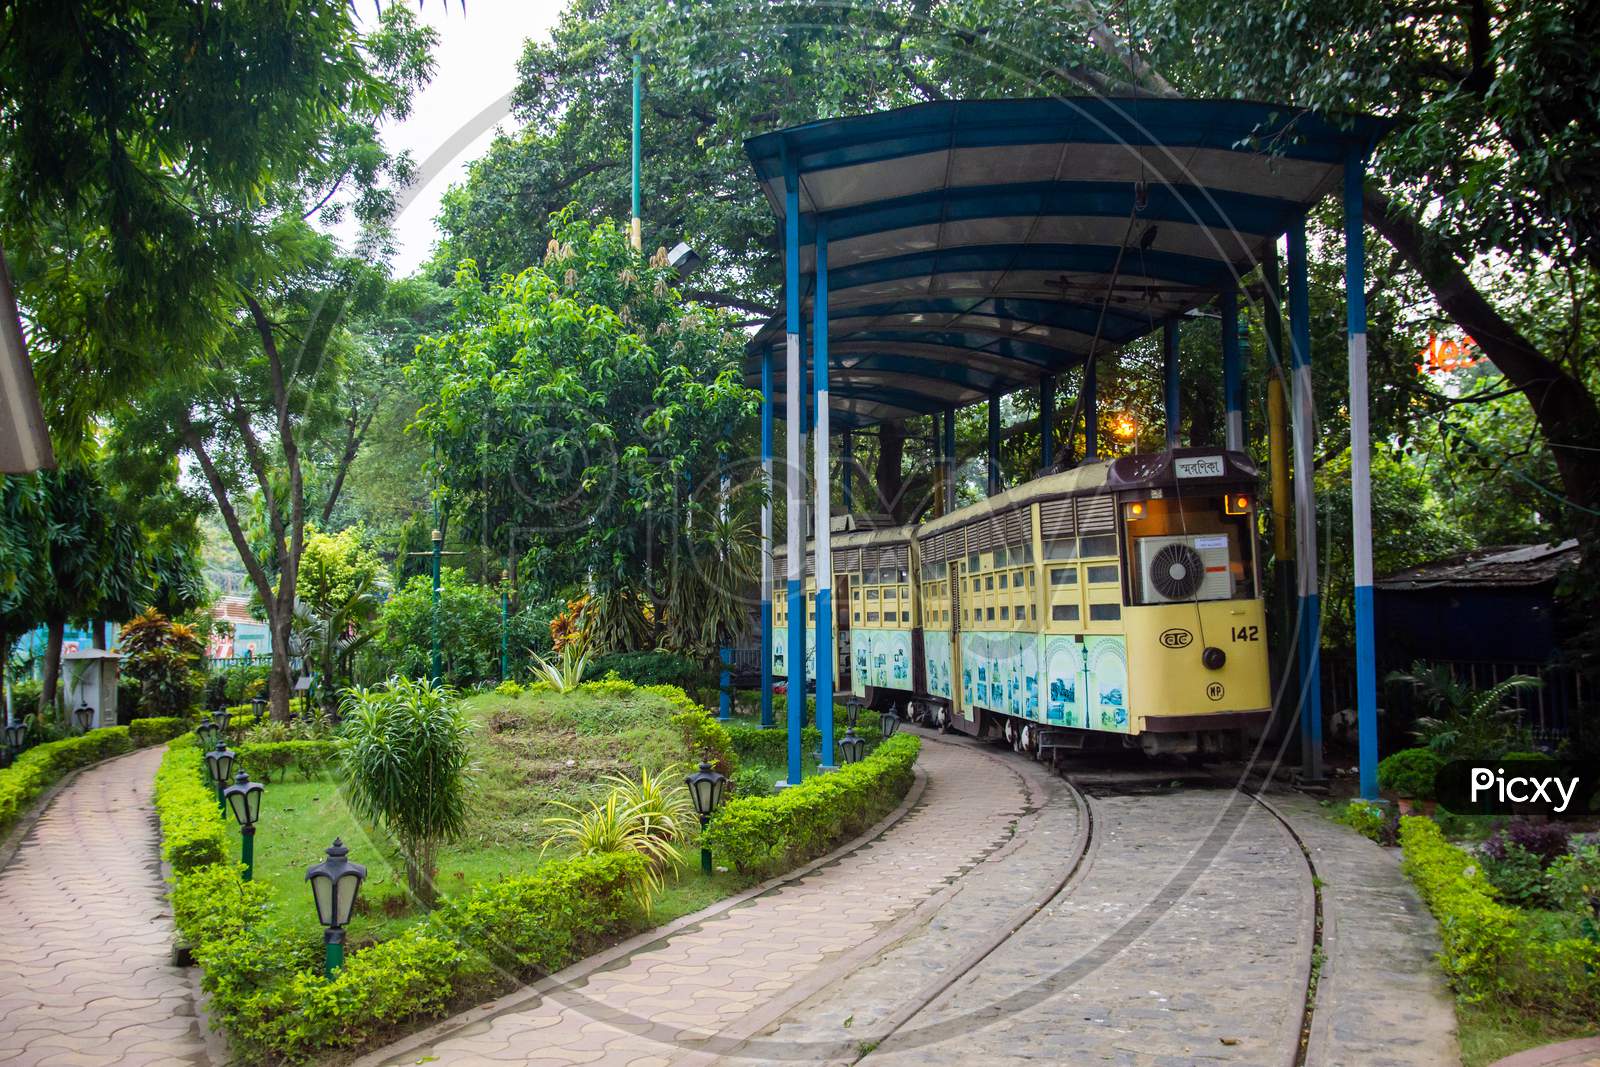 Old Heritage Kolkata tram